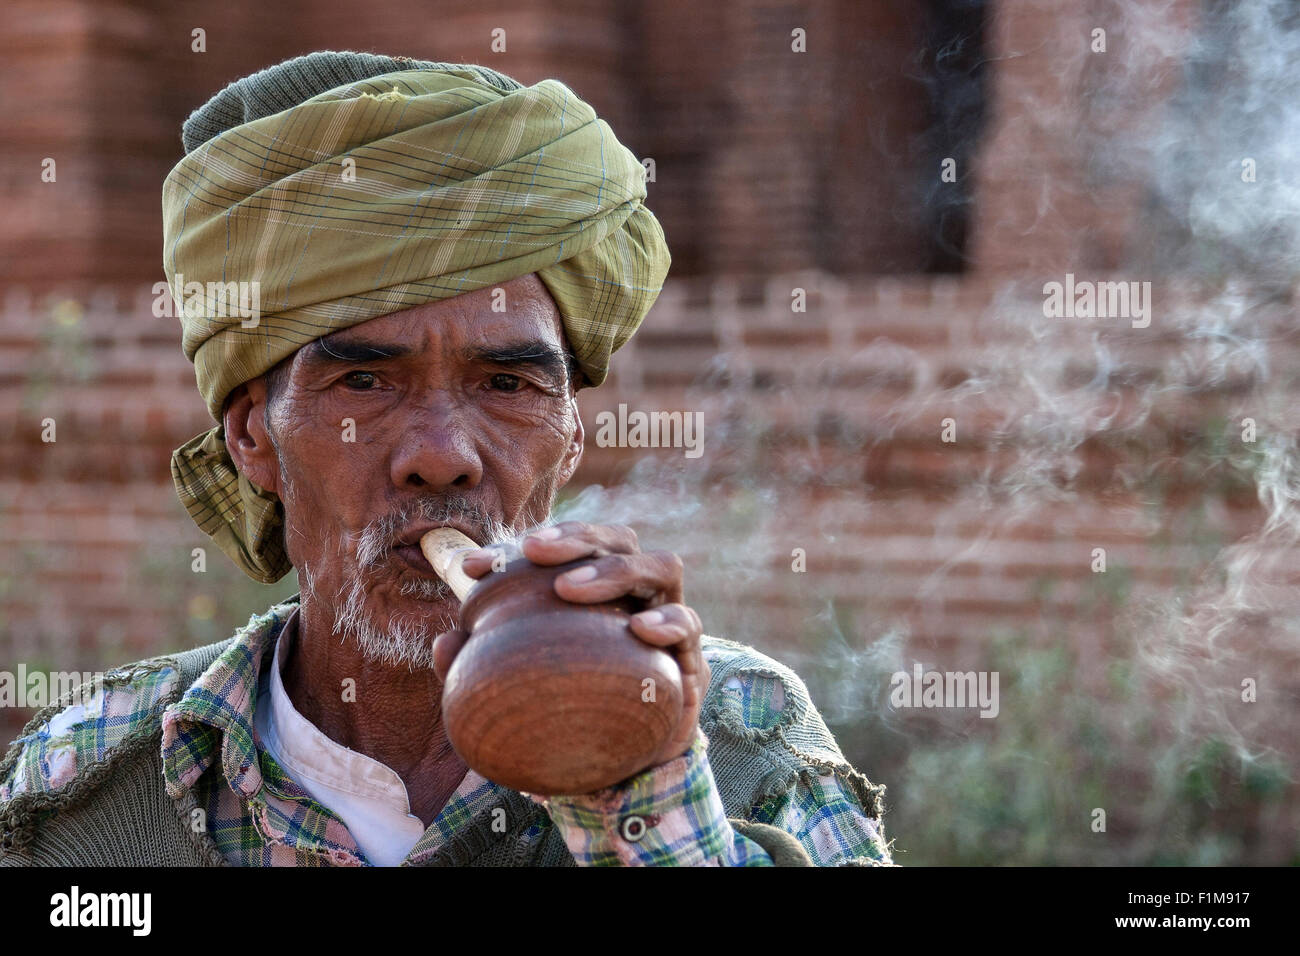 Vecchio indigeni testa di uomo con turbante, fumare un sigaro Cheeroot, ritratto, Bagan, Mandalay regione, Myanmar Foto Stock